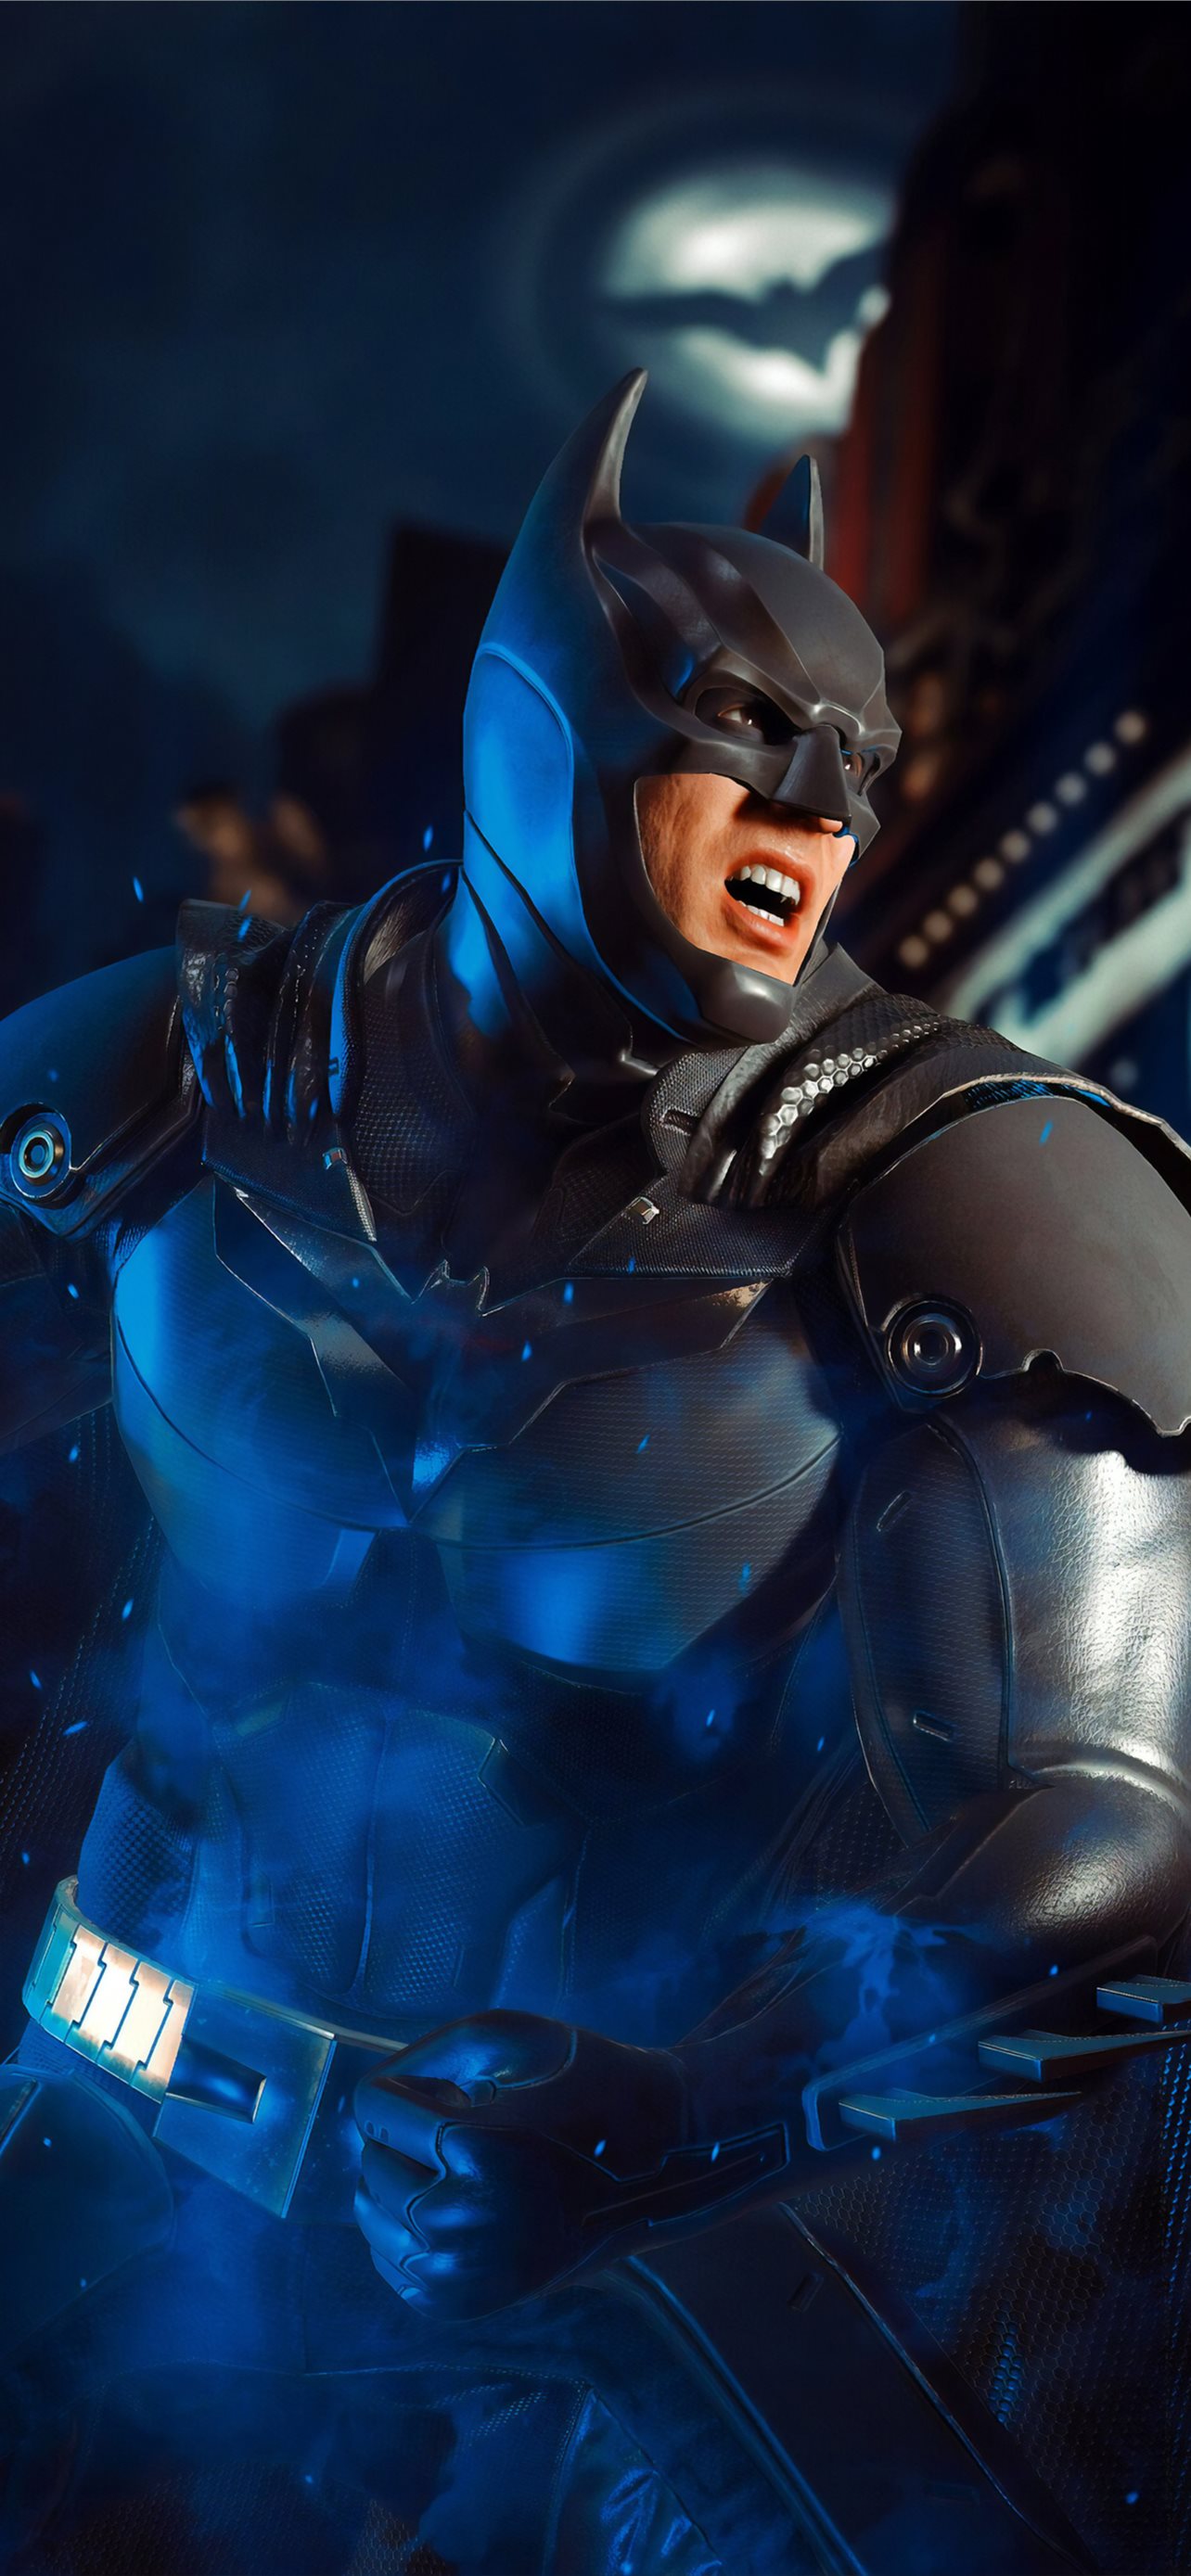 Batman Injustice 2 Game Sony Xperia X XZ Z5 Premiu... iPhone Wallpapers  Free Download